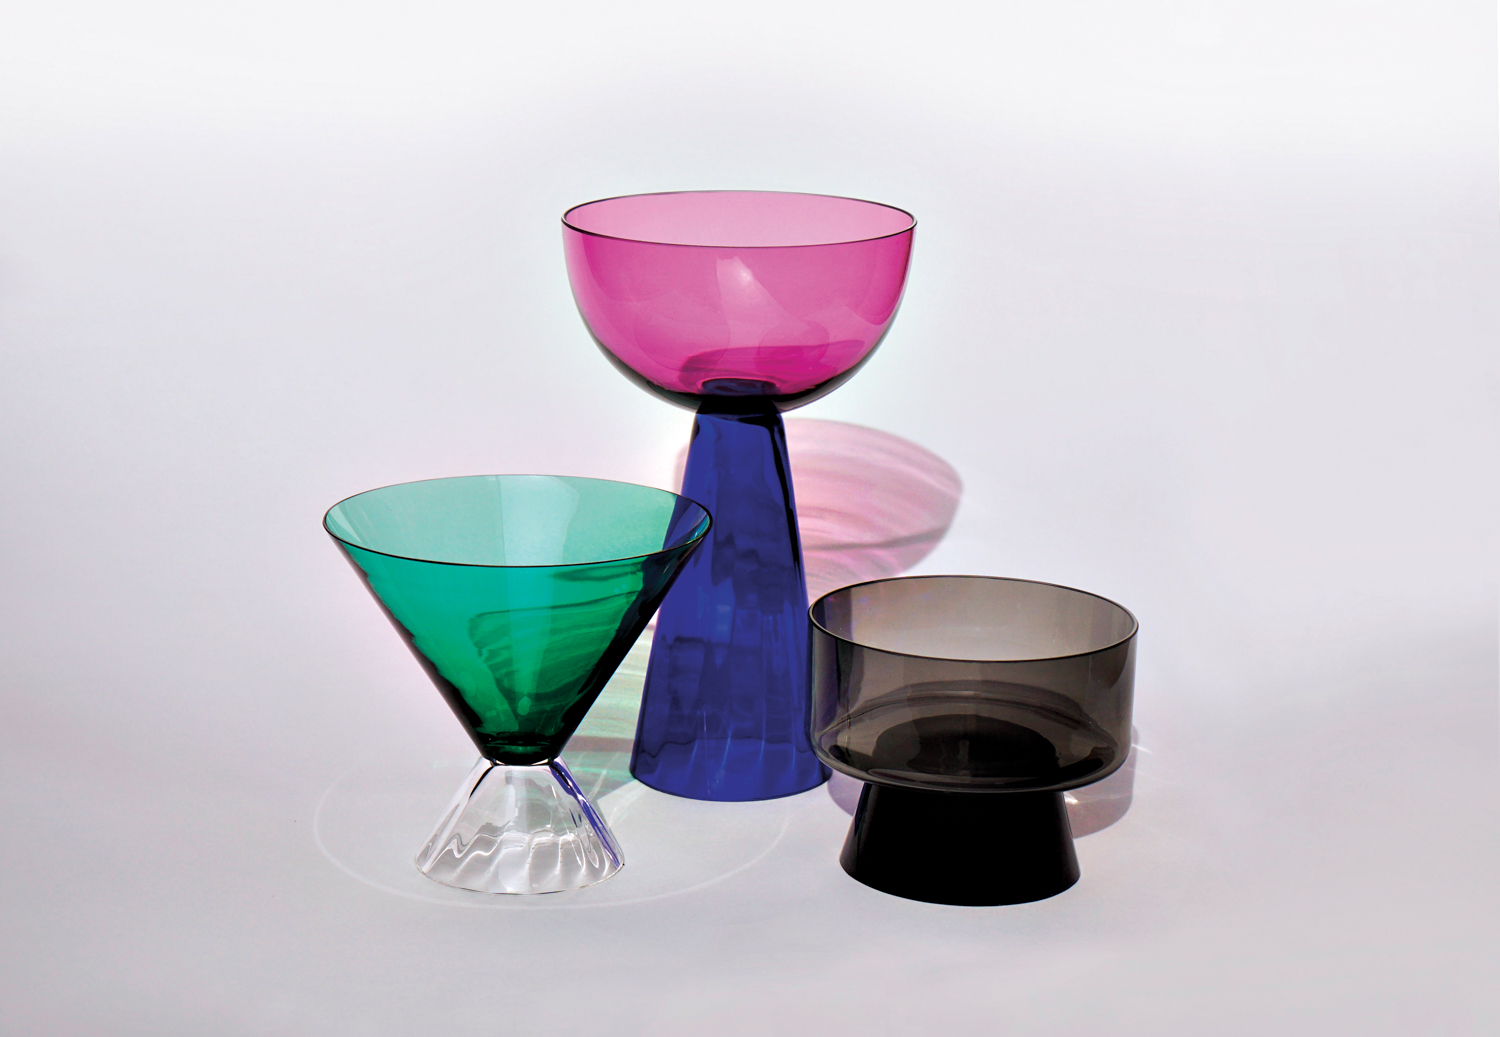 Three colored-glass, geometric-shaped glasses by Kickie Chudikova